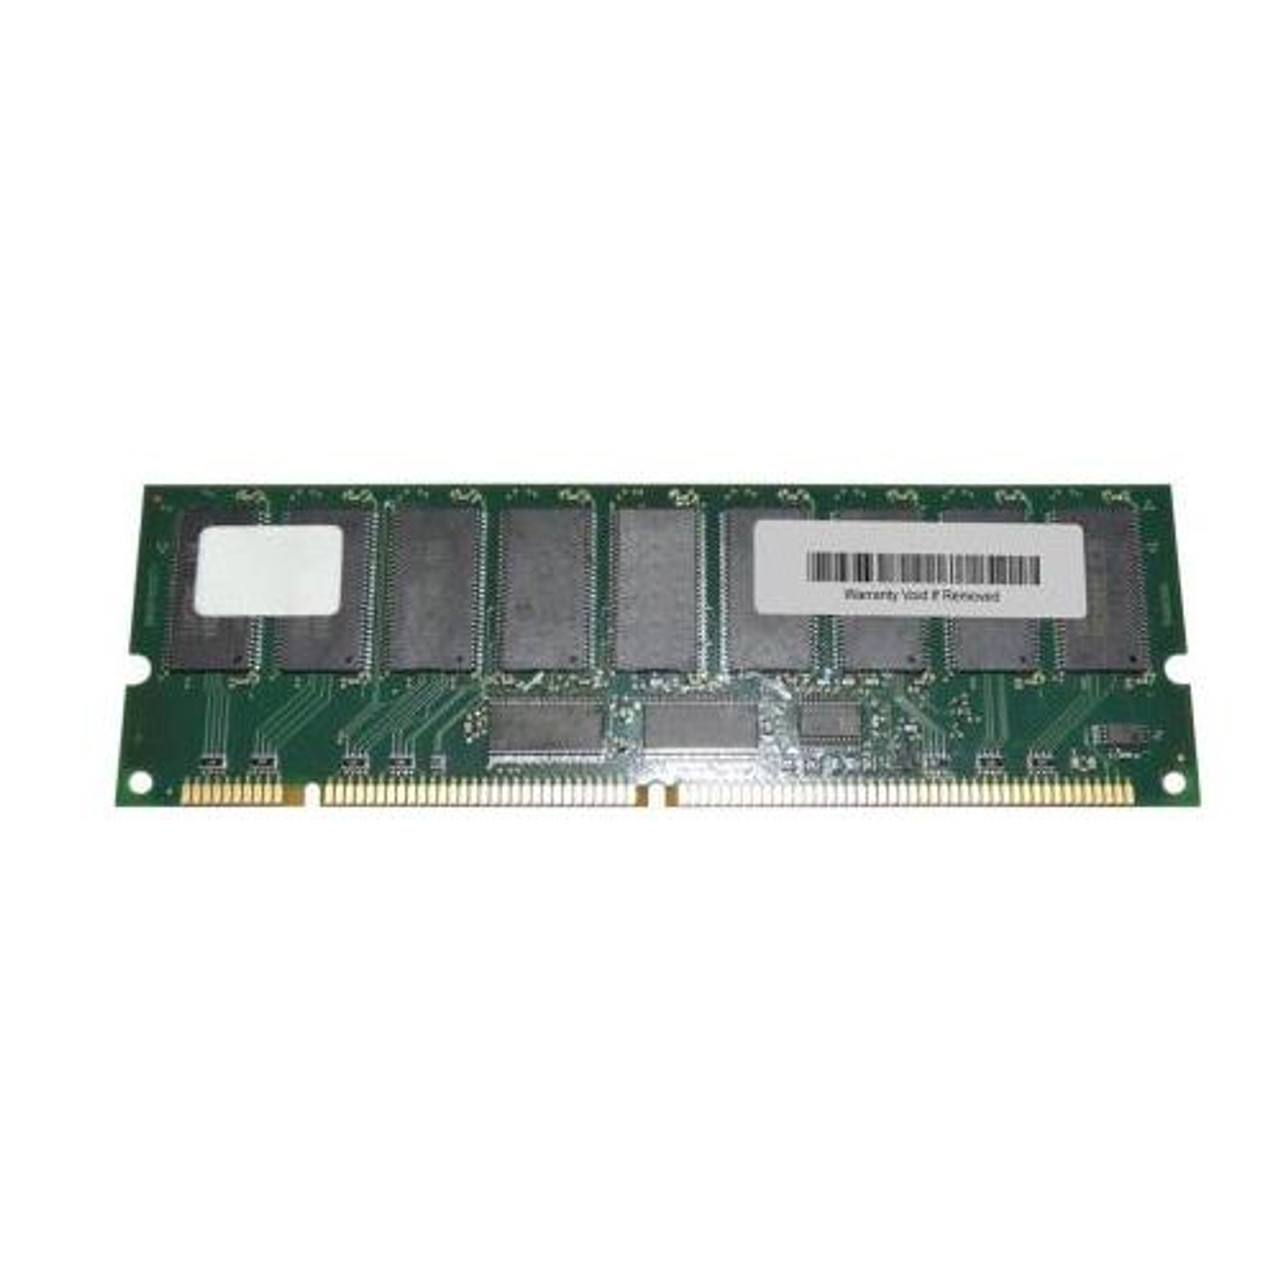 170517-001 Compaq 512MB SDRAM Registered ECC PC-100 100Mhz Server